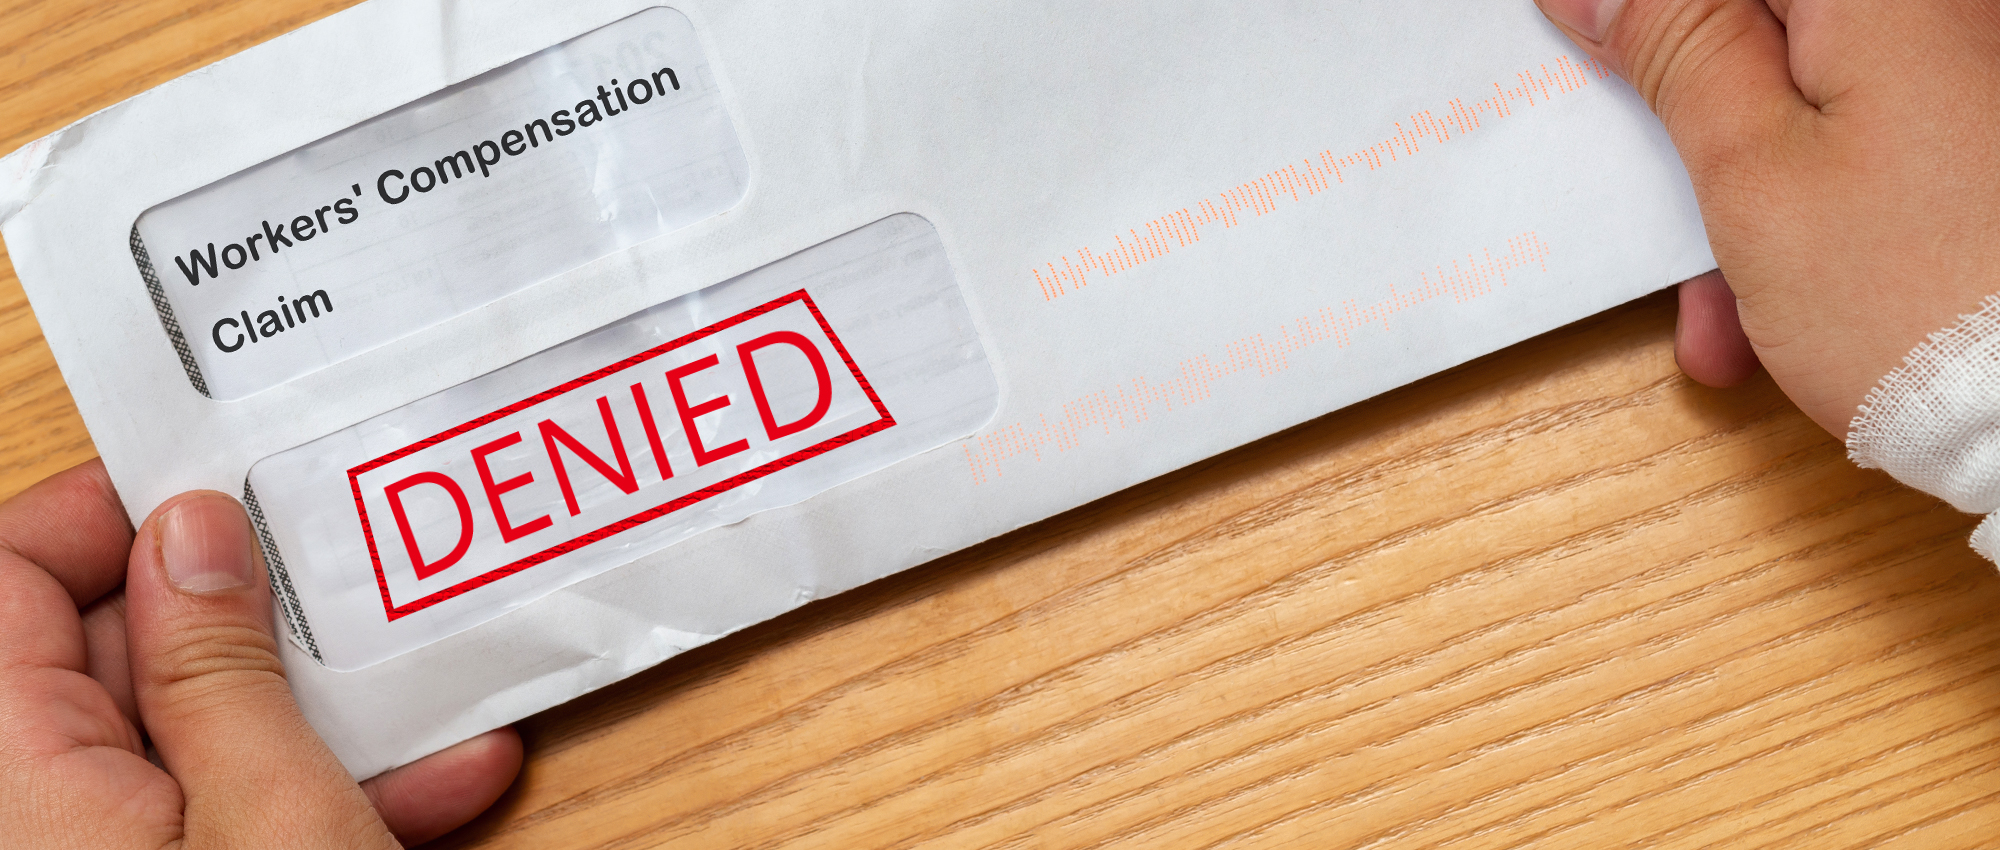 Envelope shows denied workers' compensation claim stamp.